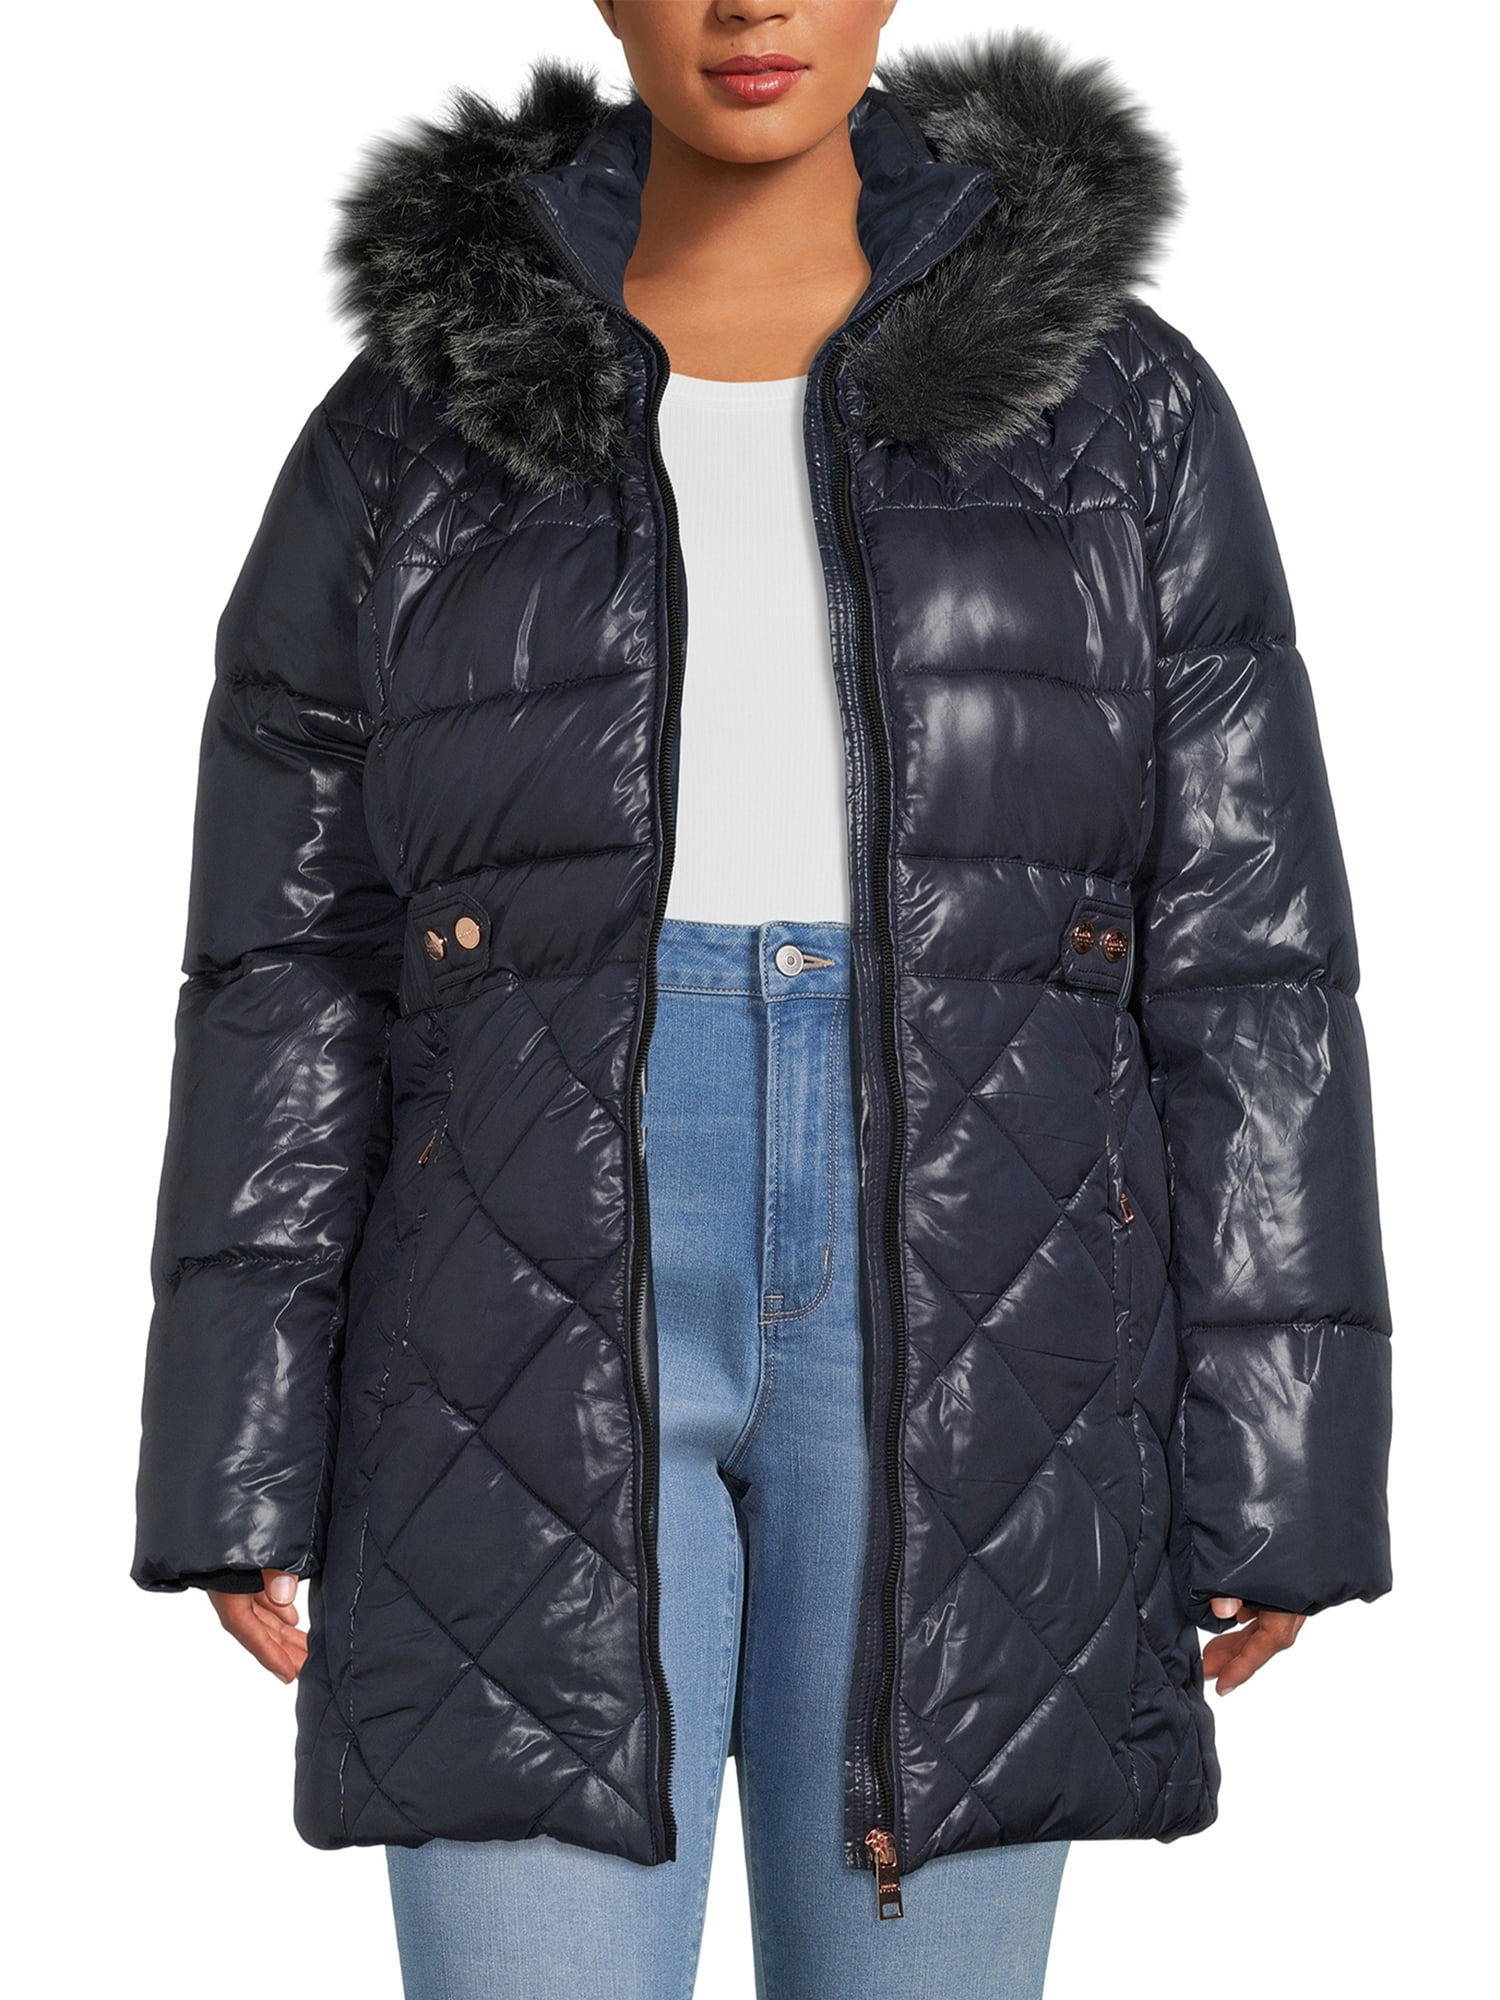 Nicole Miller Women's Plus Size Quilted Puffer Coat with Hood - Walmart.com